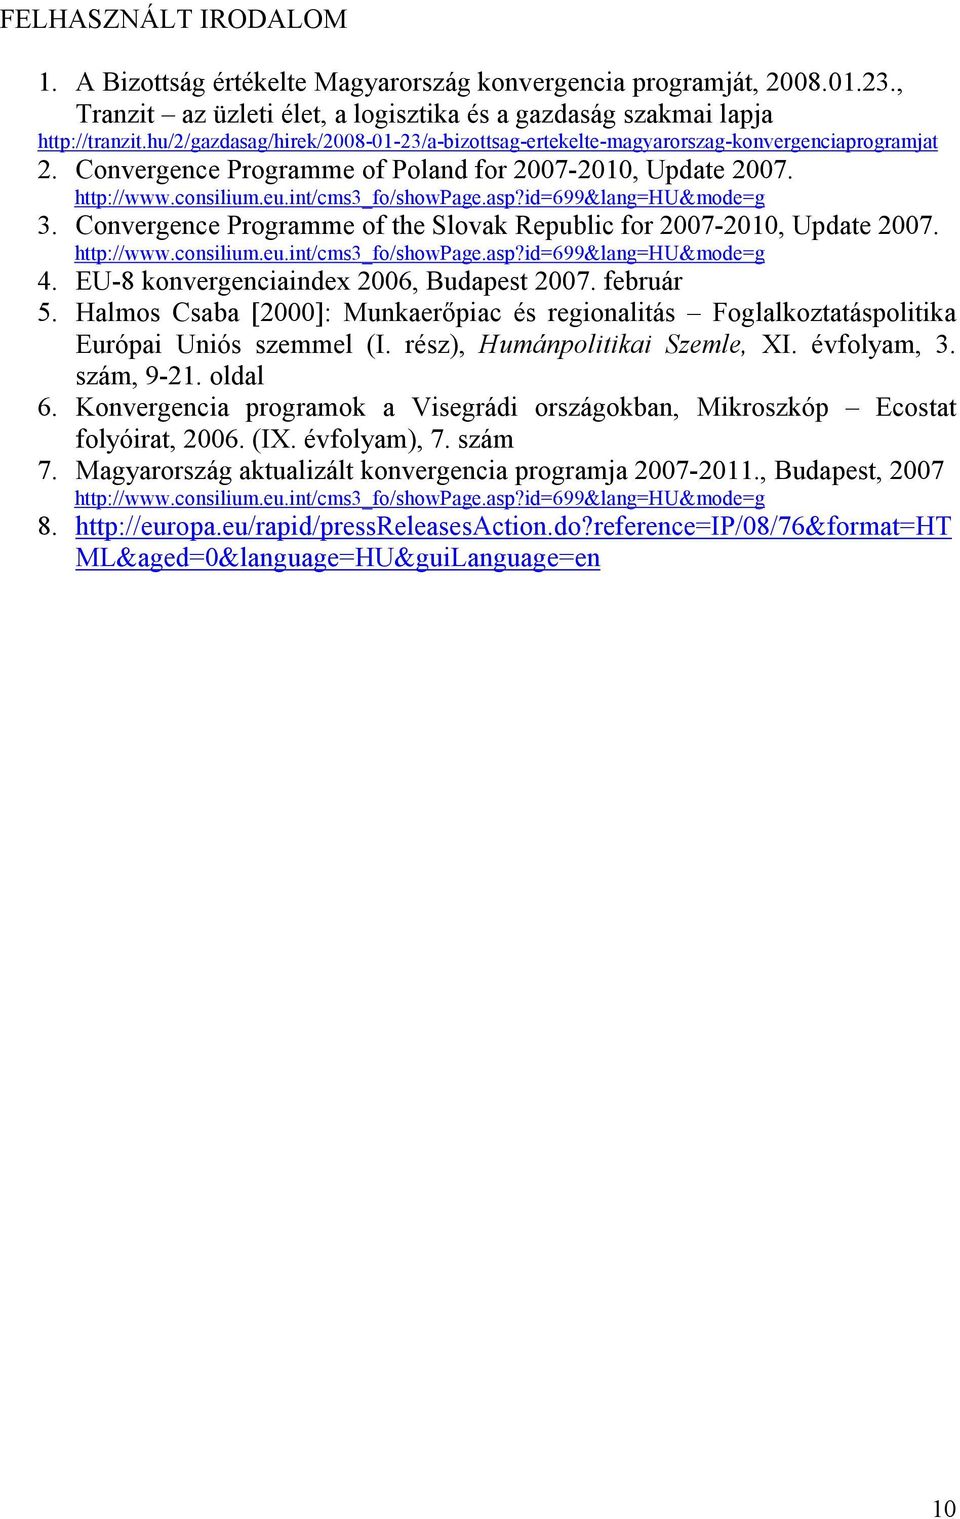 asp?id=699&lang=hu&mode=g 3. Convergence Programme of the Slovak Republic for 2007-2010, Update 2007. http://www.consilium.eu.int/cms3_fo/showpage.asp?id=699&lang=hu&mode=g 4.